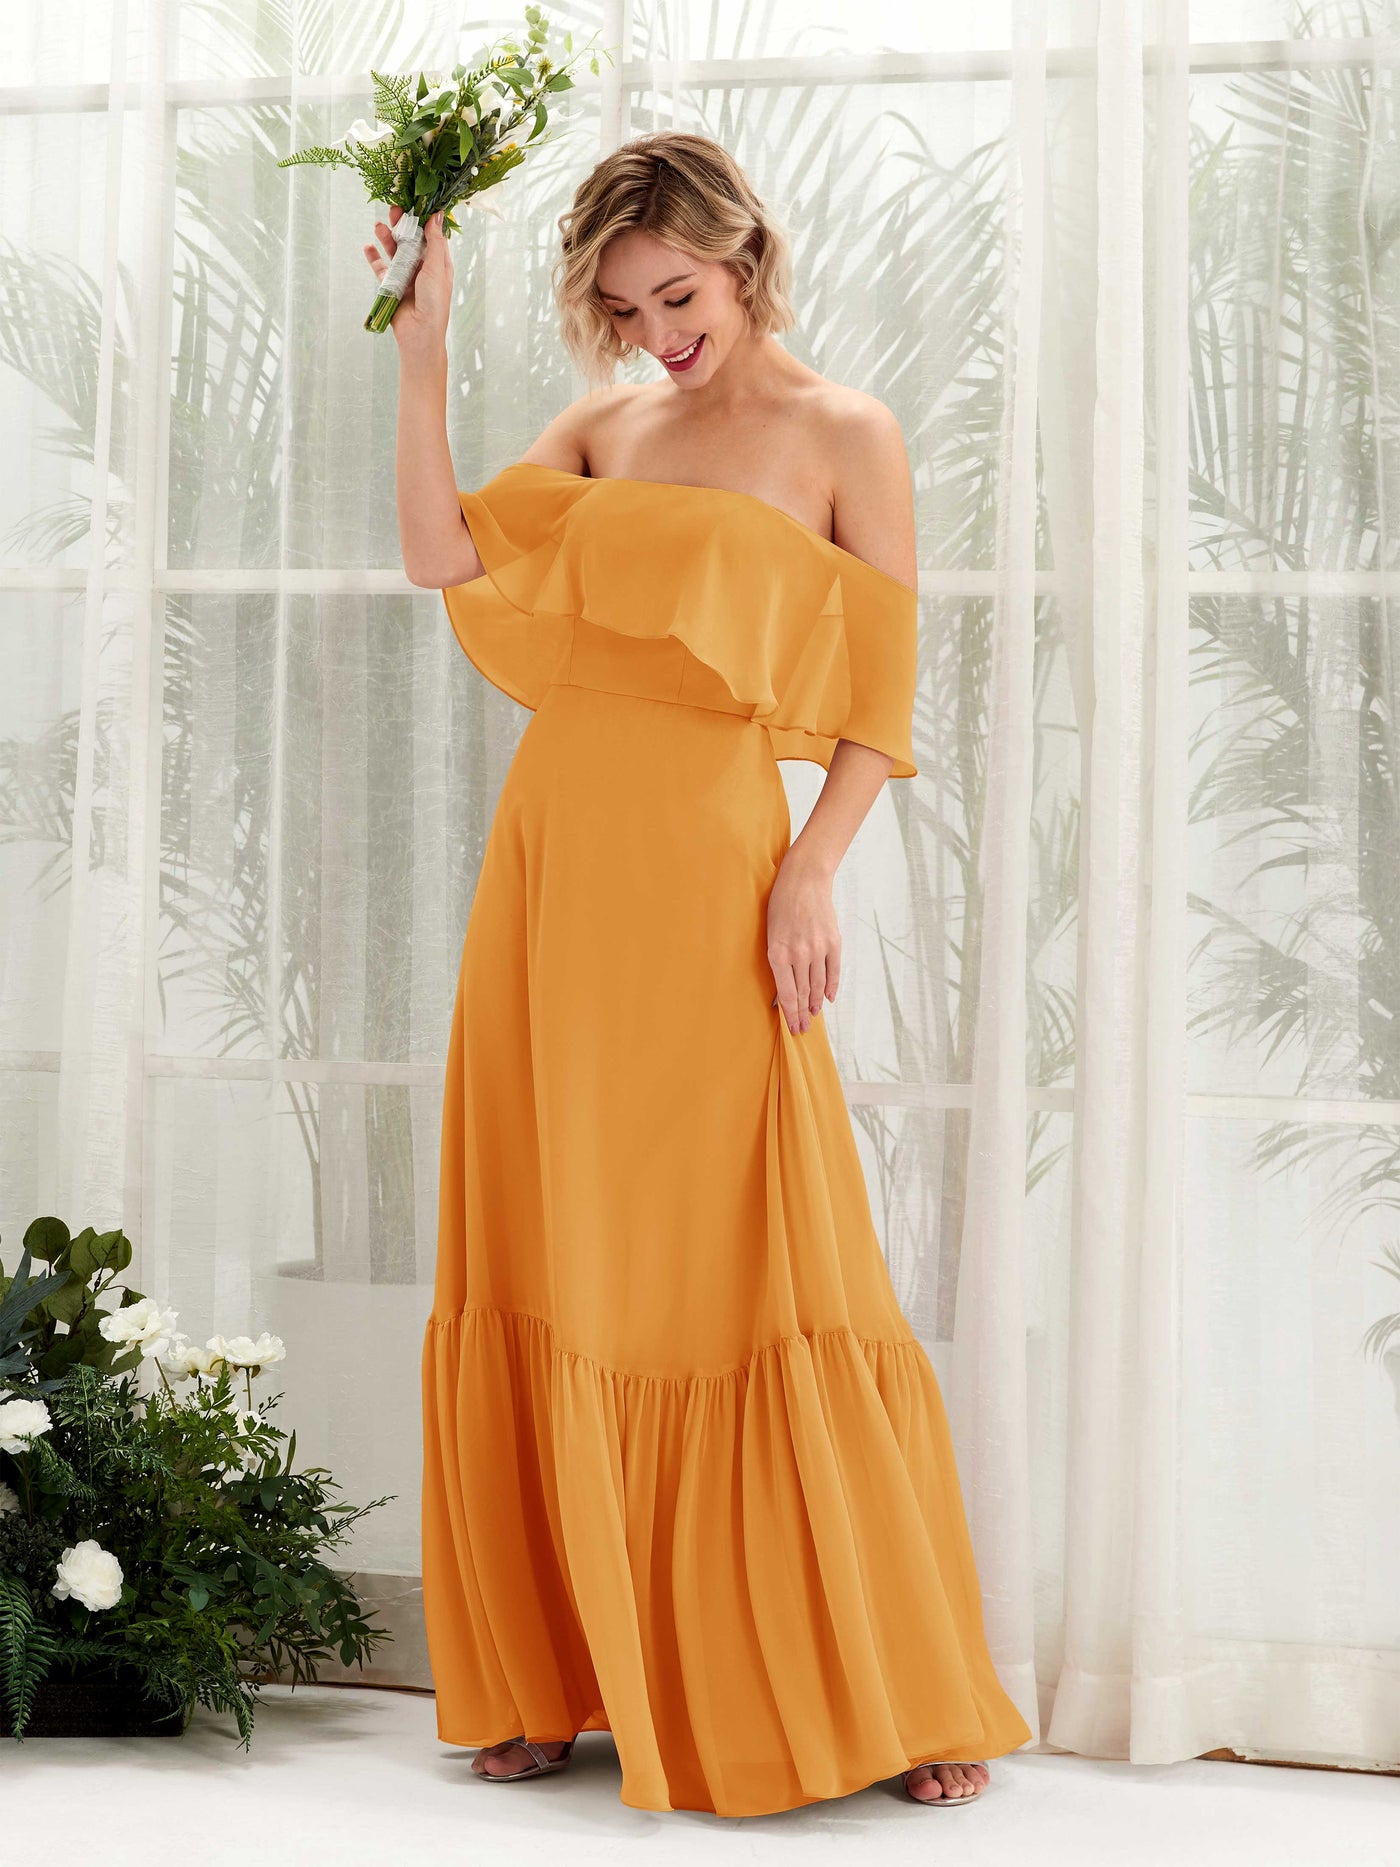 Mango Bridesmaid Dresses Bridesmaid Dress A-line Chiffon Off Shoulder Full Length Sleeveless Wedding Party Dress (81224502)#color_mango